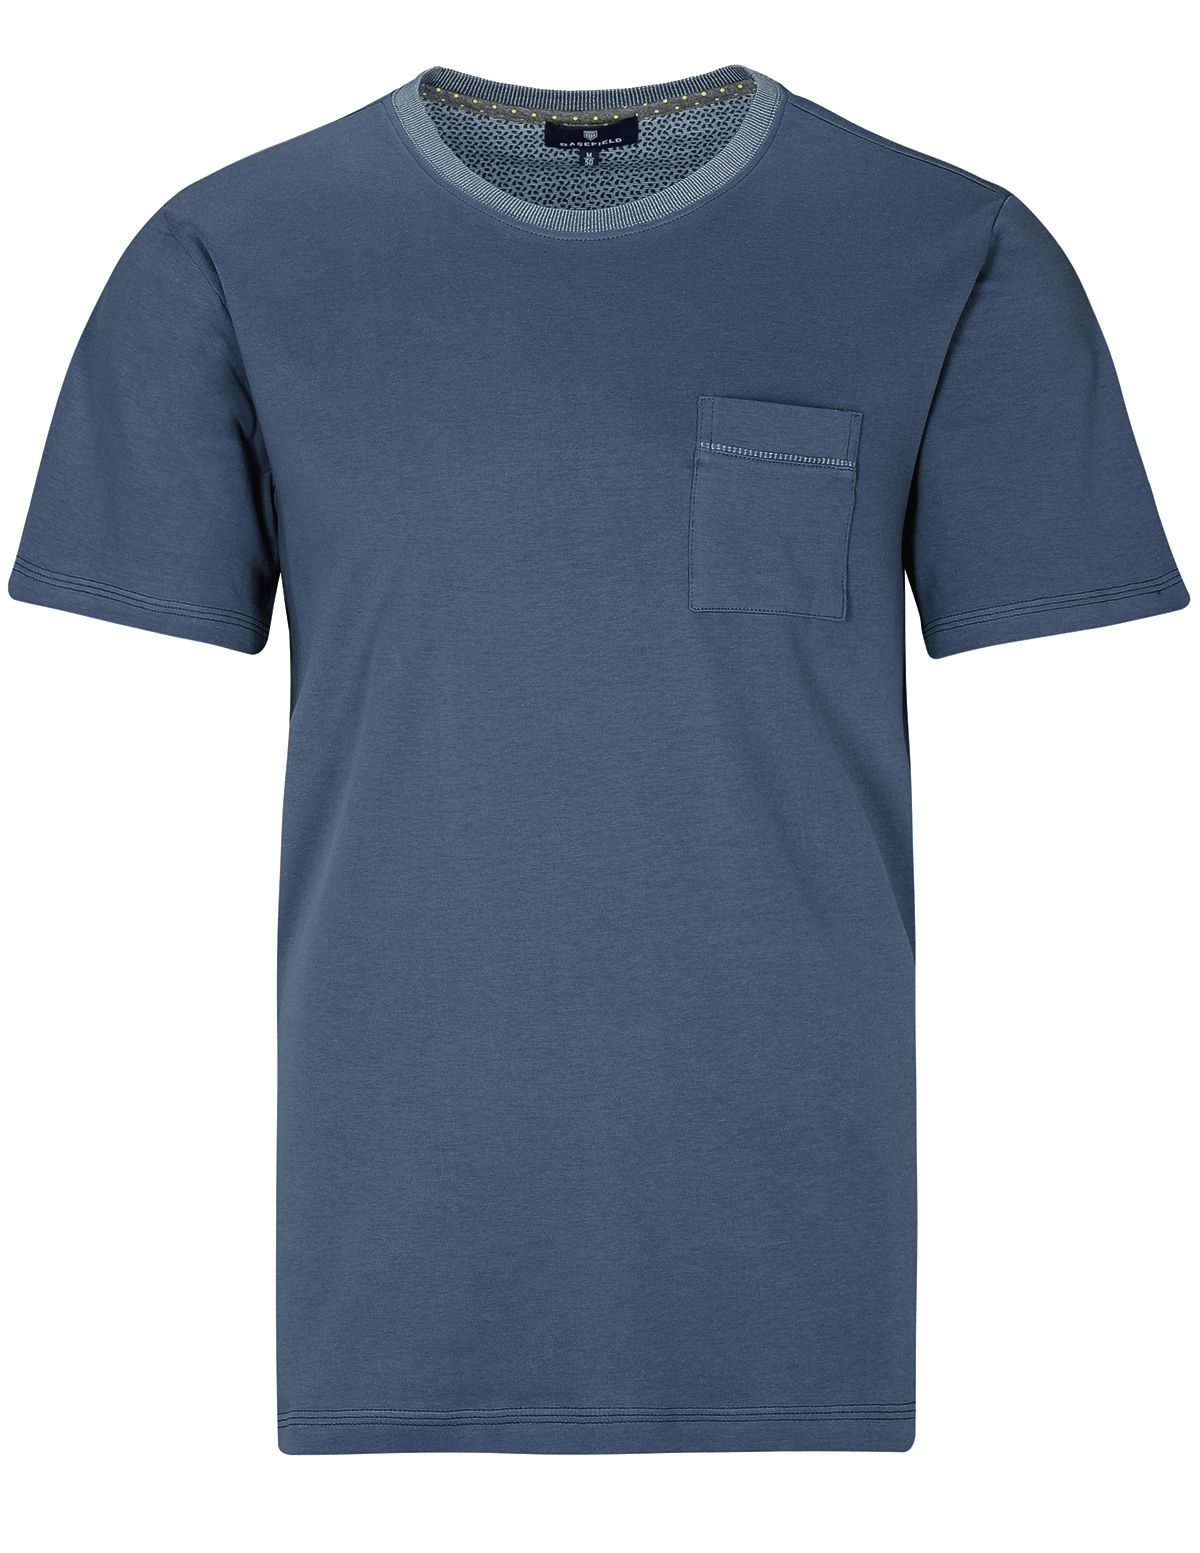 Homewear Shirt - Denim